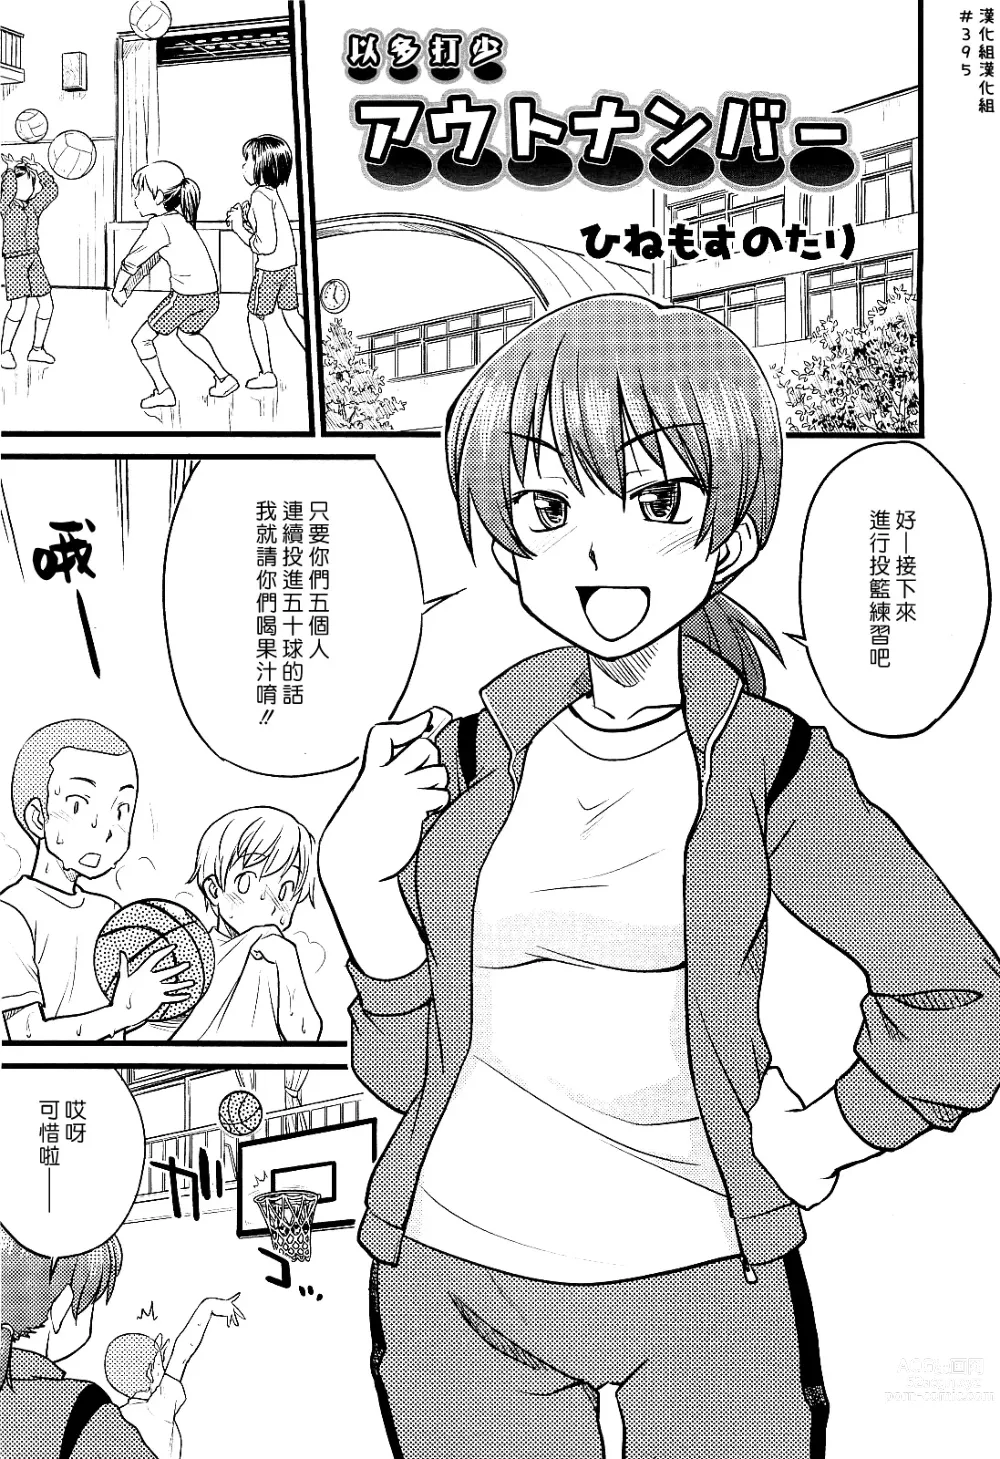 Page 1 of manga 以多打少